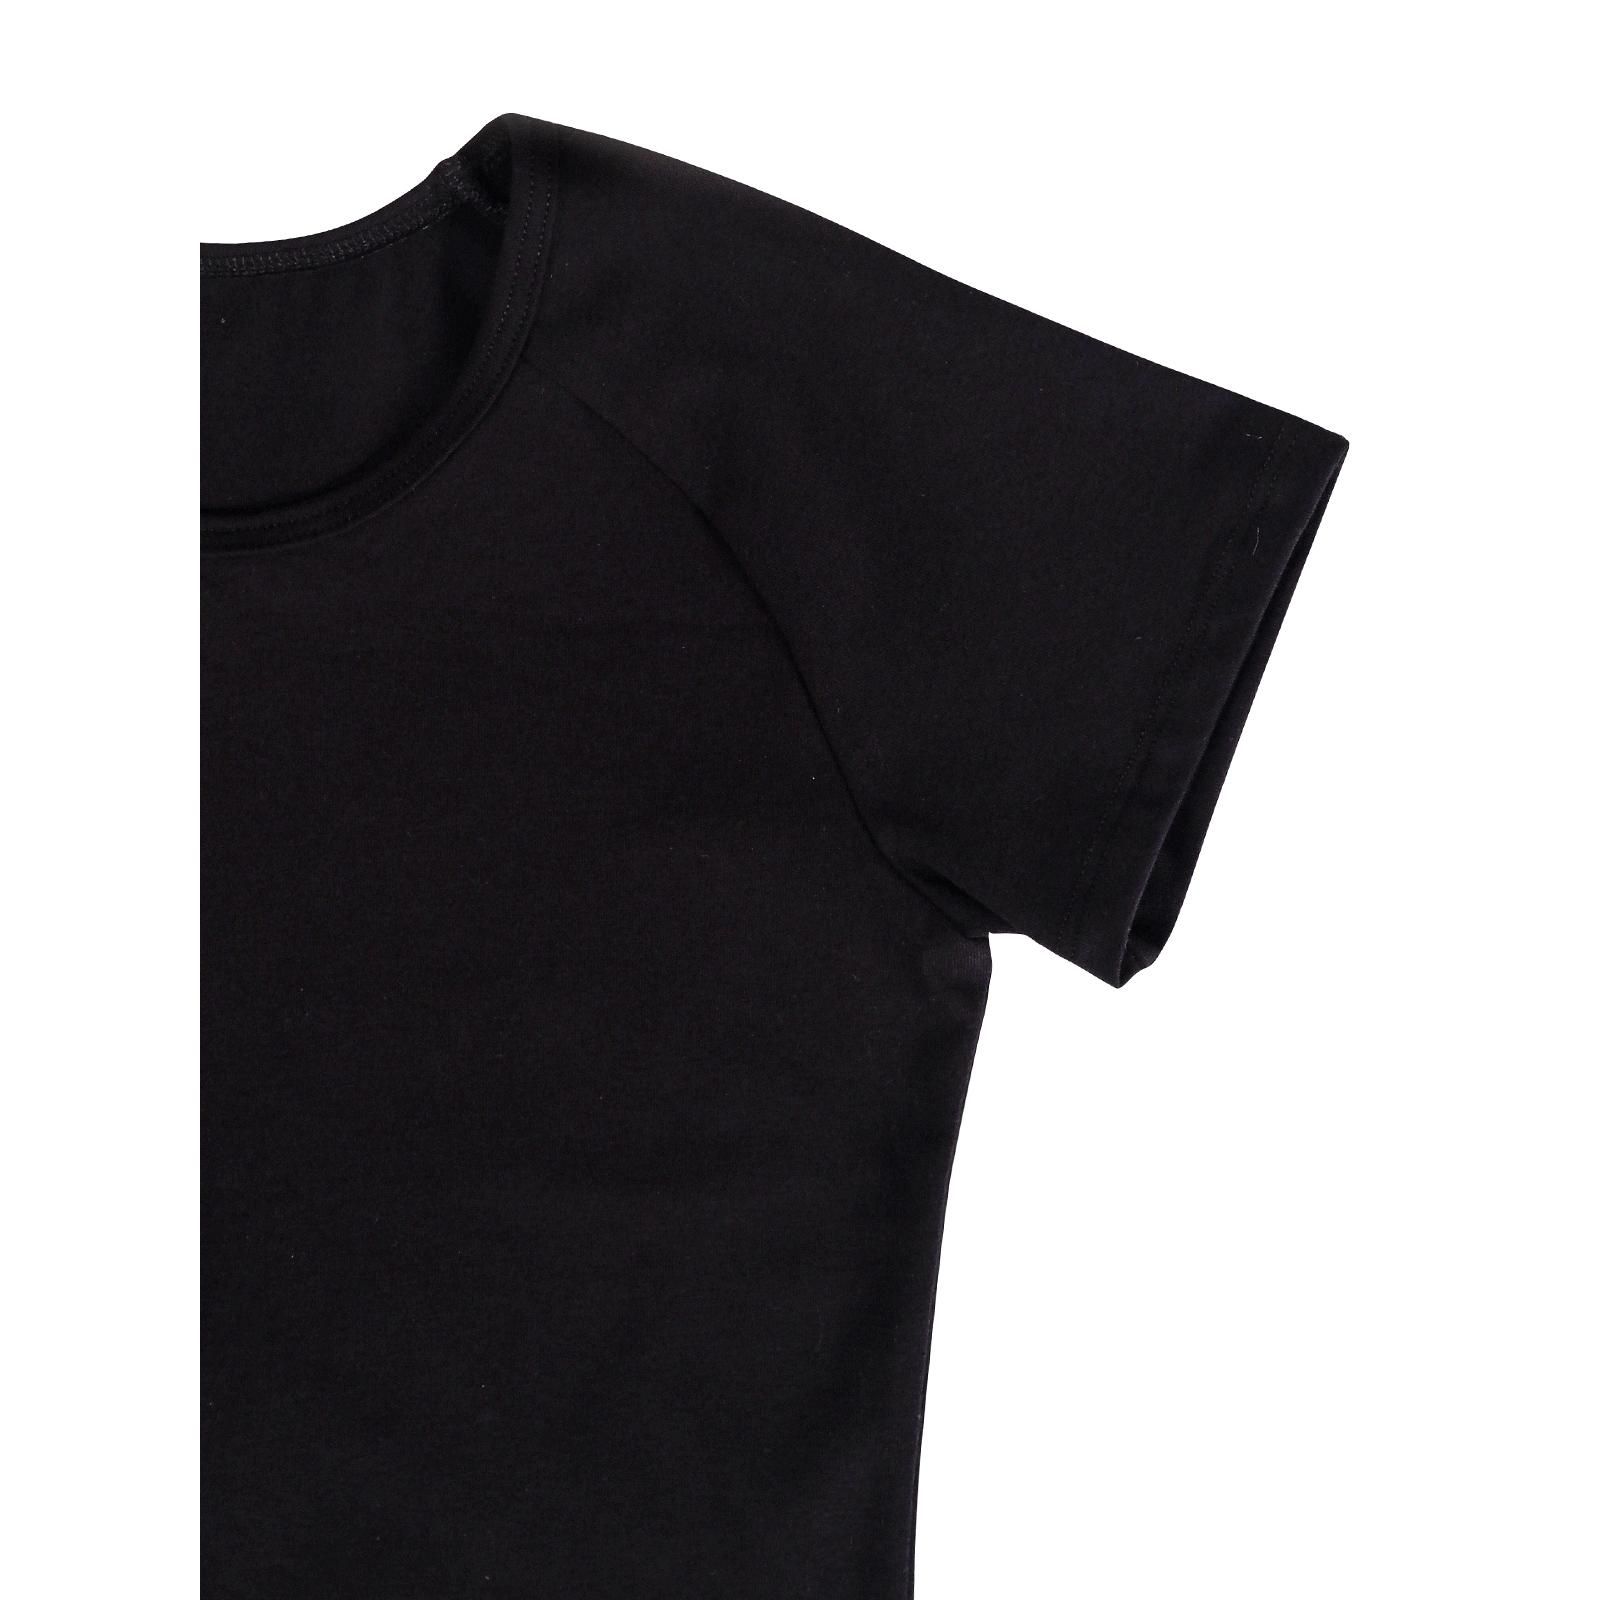 Camiseta Mangas Raglán de Algodón SOLO Negro Talla 44